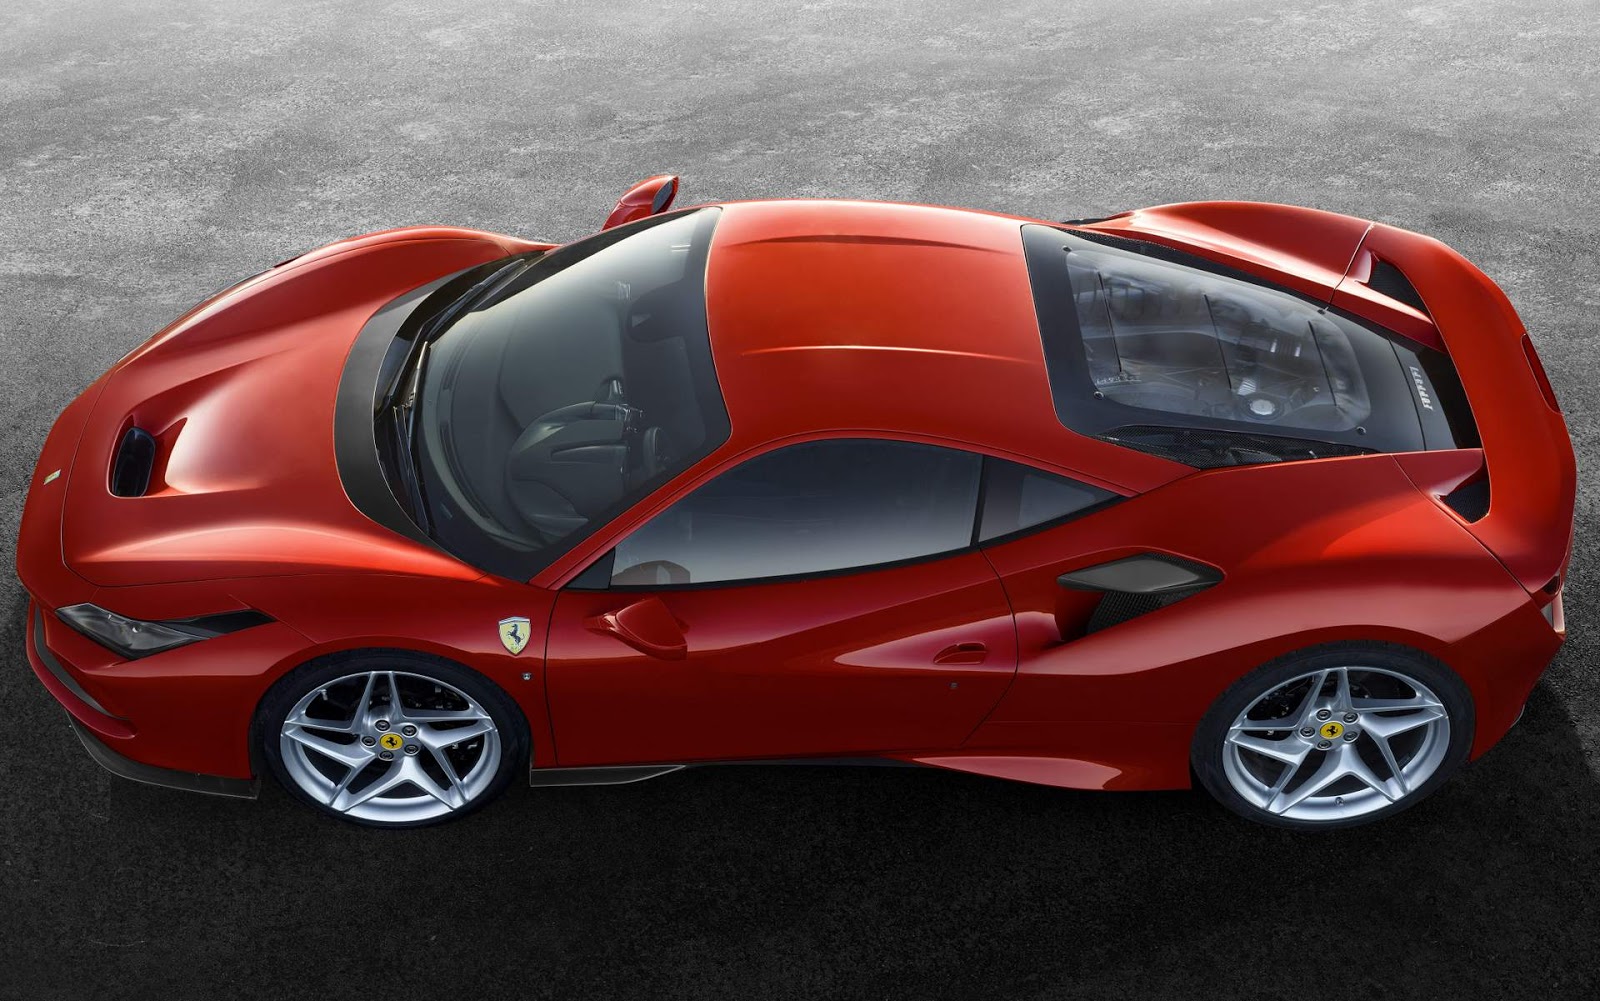 Ferrari F8 Tributo tabela fipe